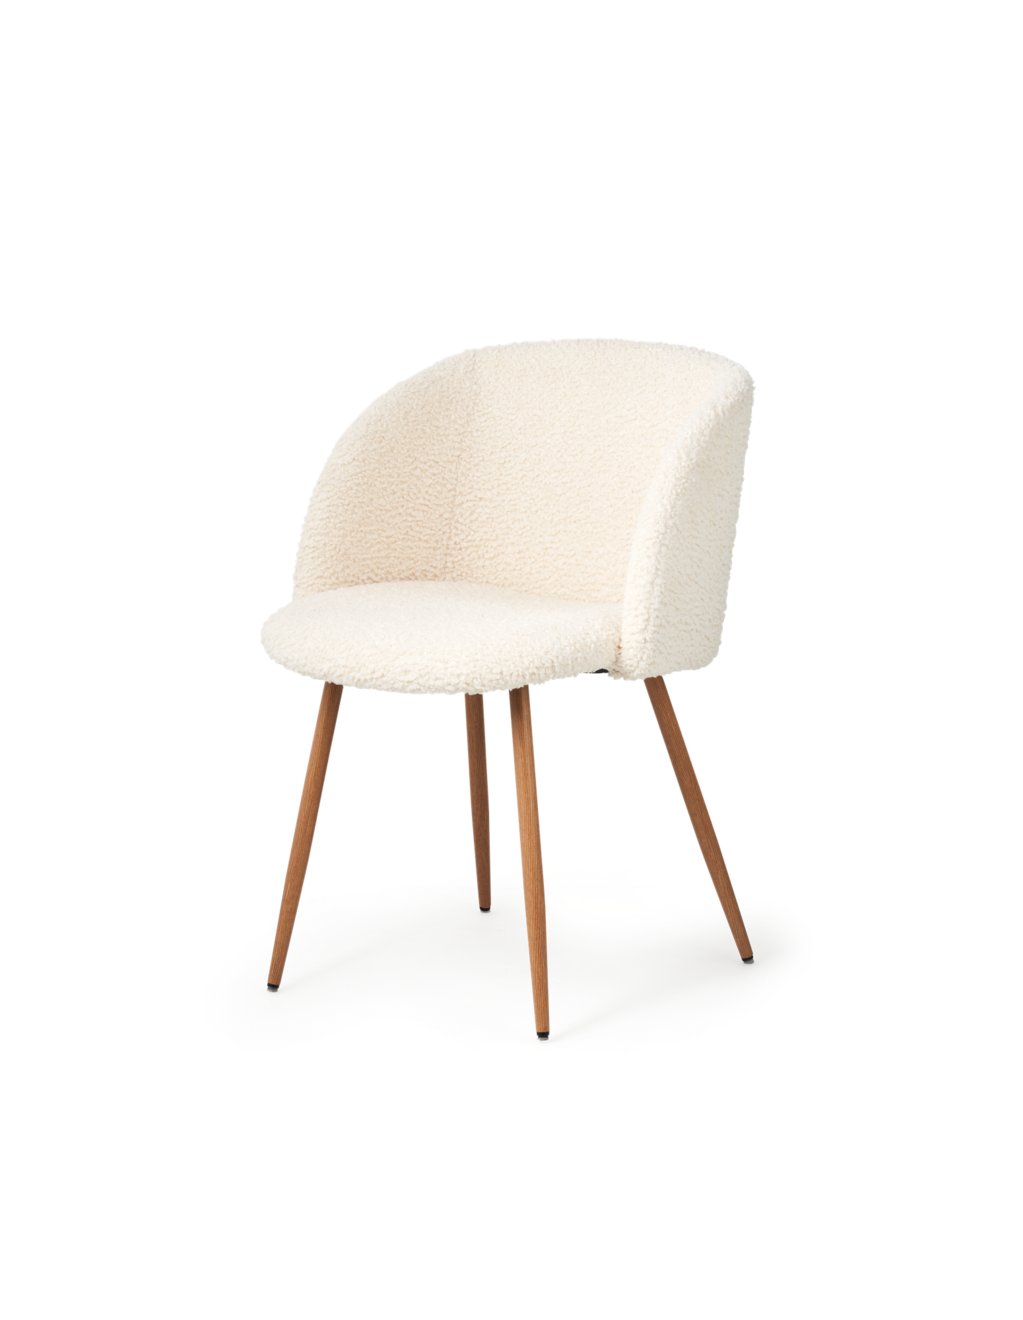 Stuhl mit Teddystoff-Bezug für 98 CHF in Søstrene Grene